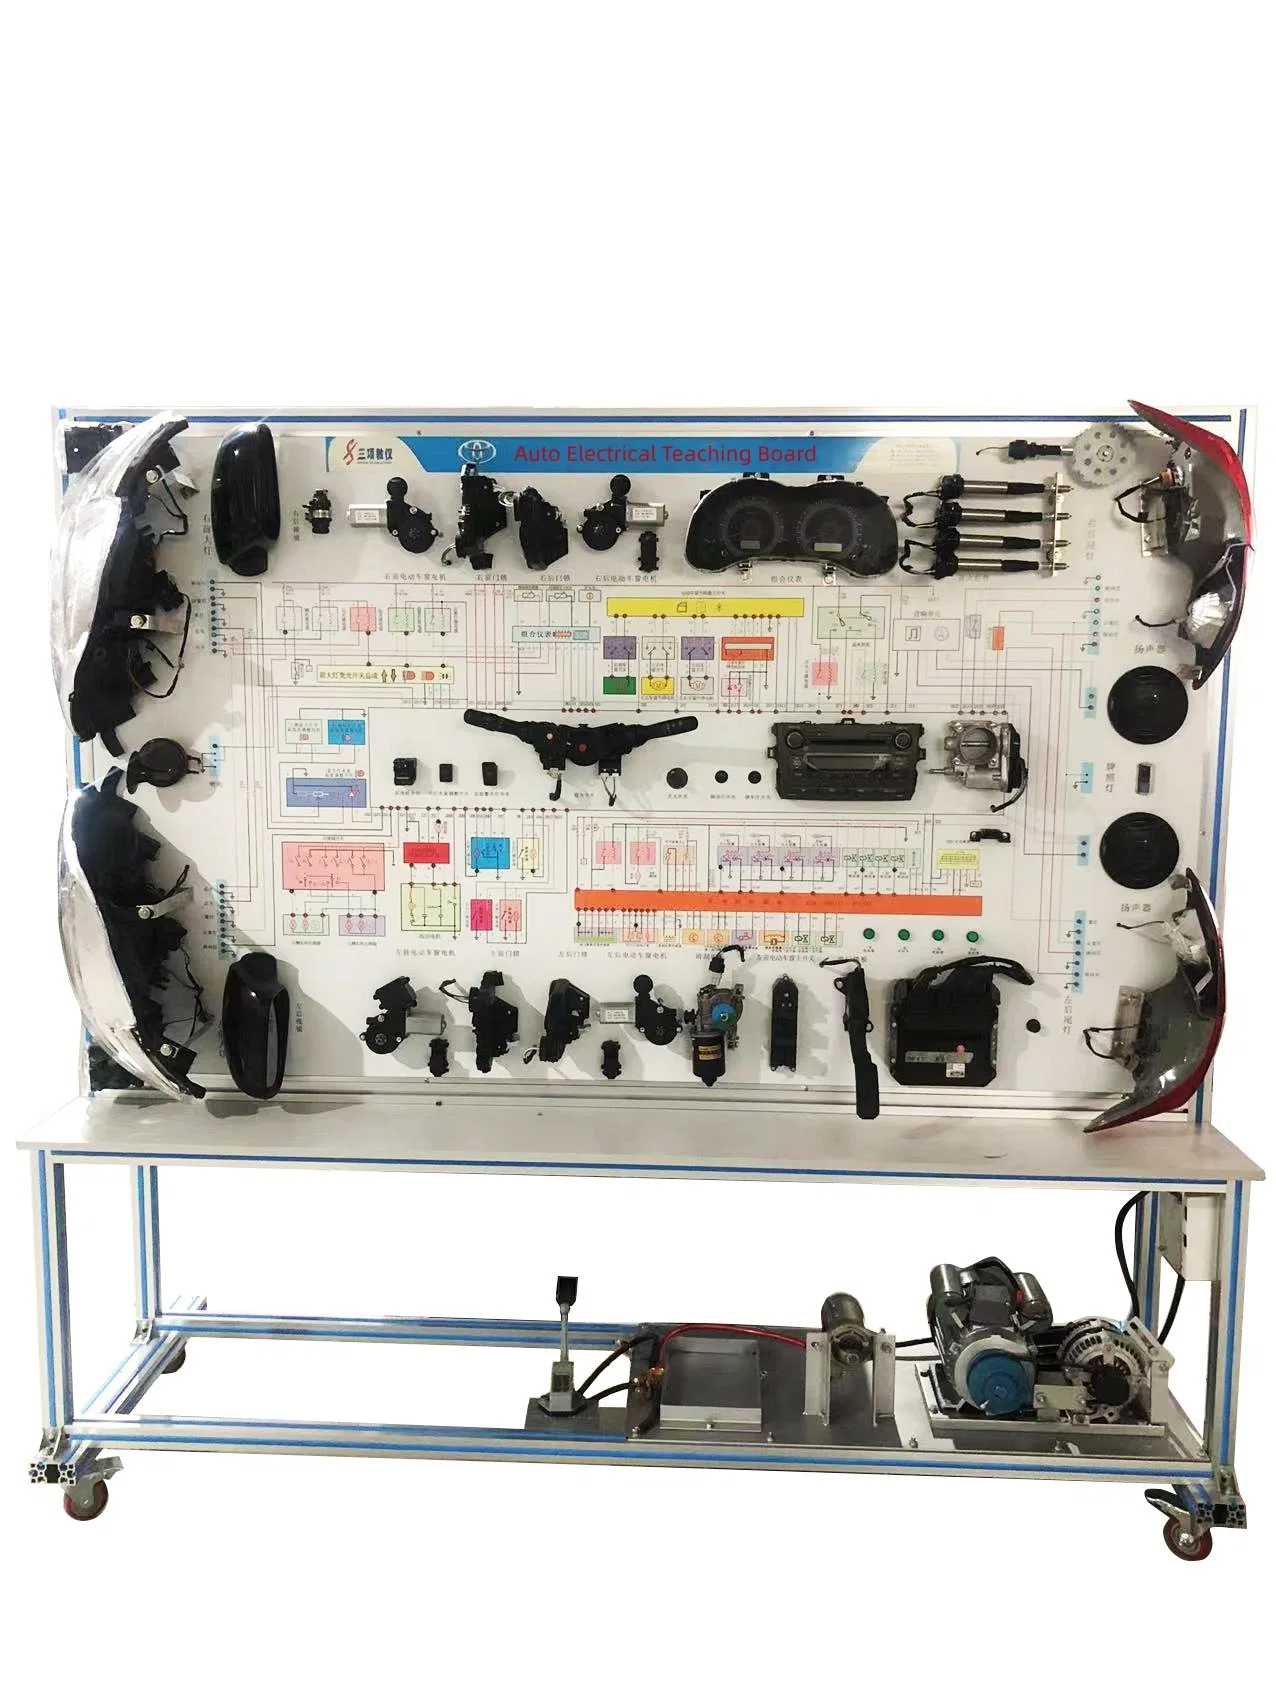 Carrera Auto Electrical لوحة الرسم التخطيطي الكهربائية معدات تعليمية للكلية